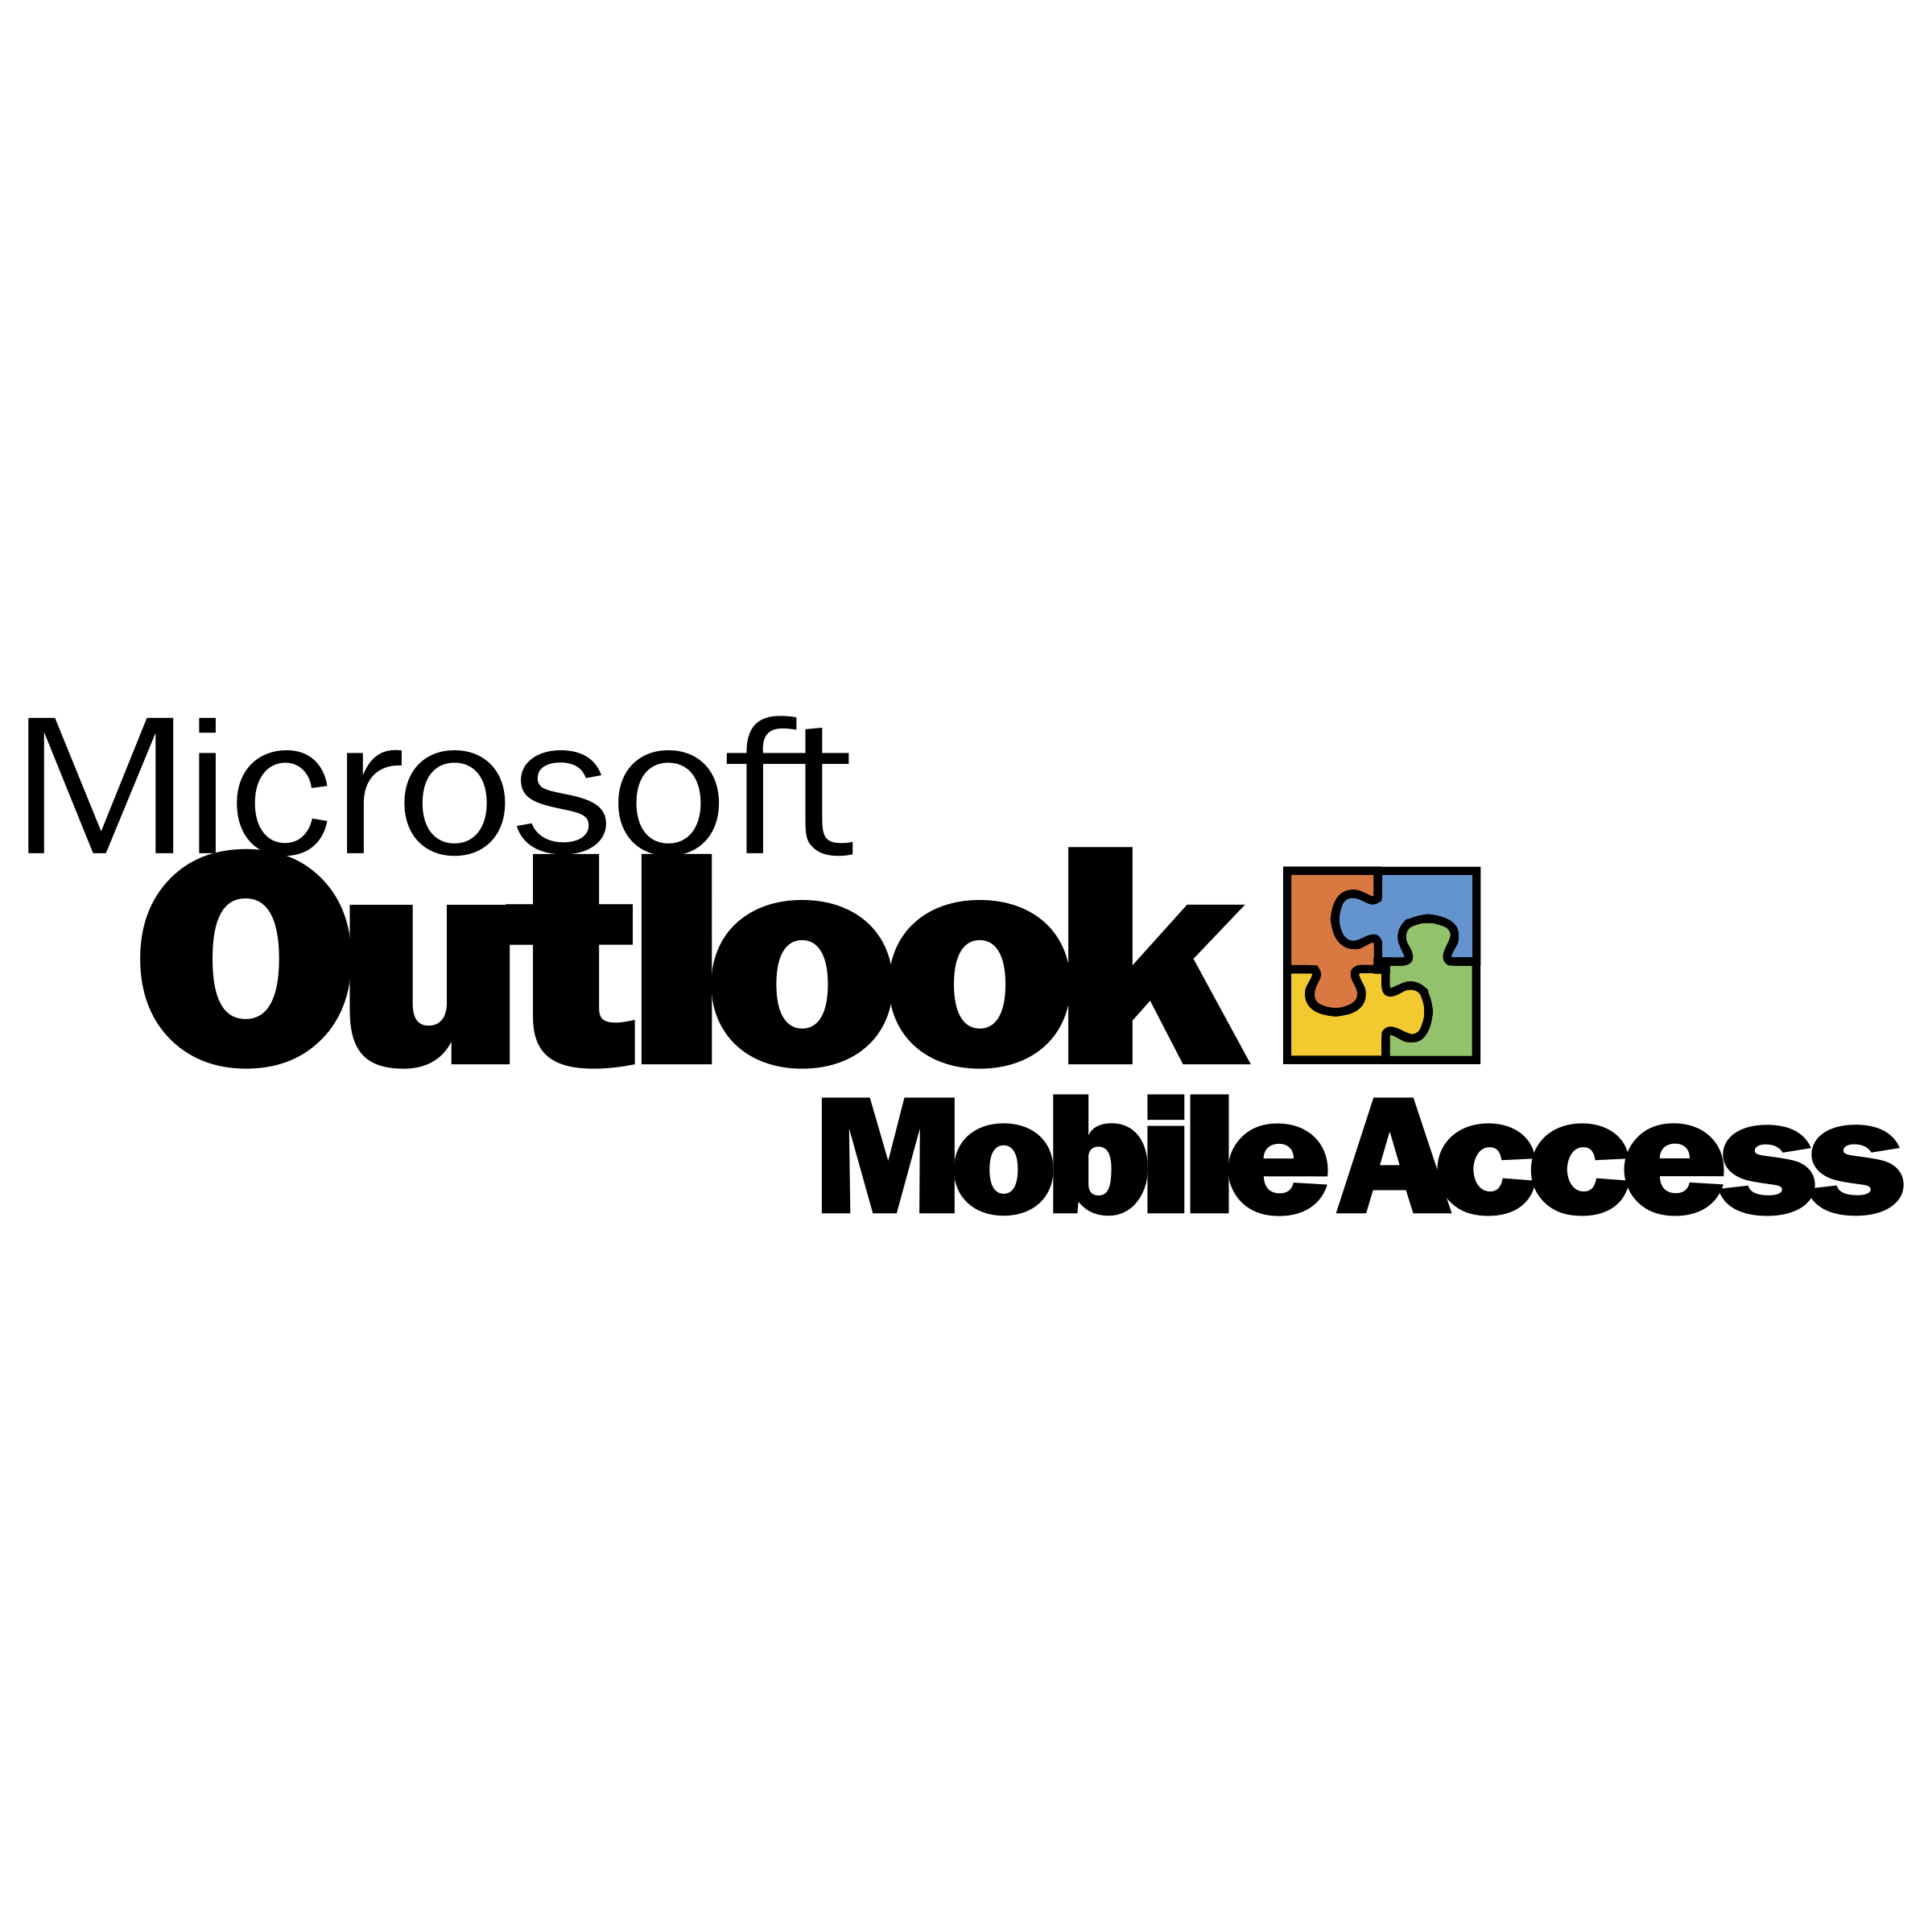 Outlook Transparent Logo - Microsoft Outlook Mobile Access Logo PNG Transparent & SVG Vector ...